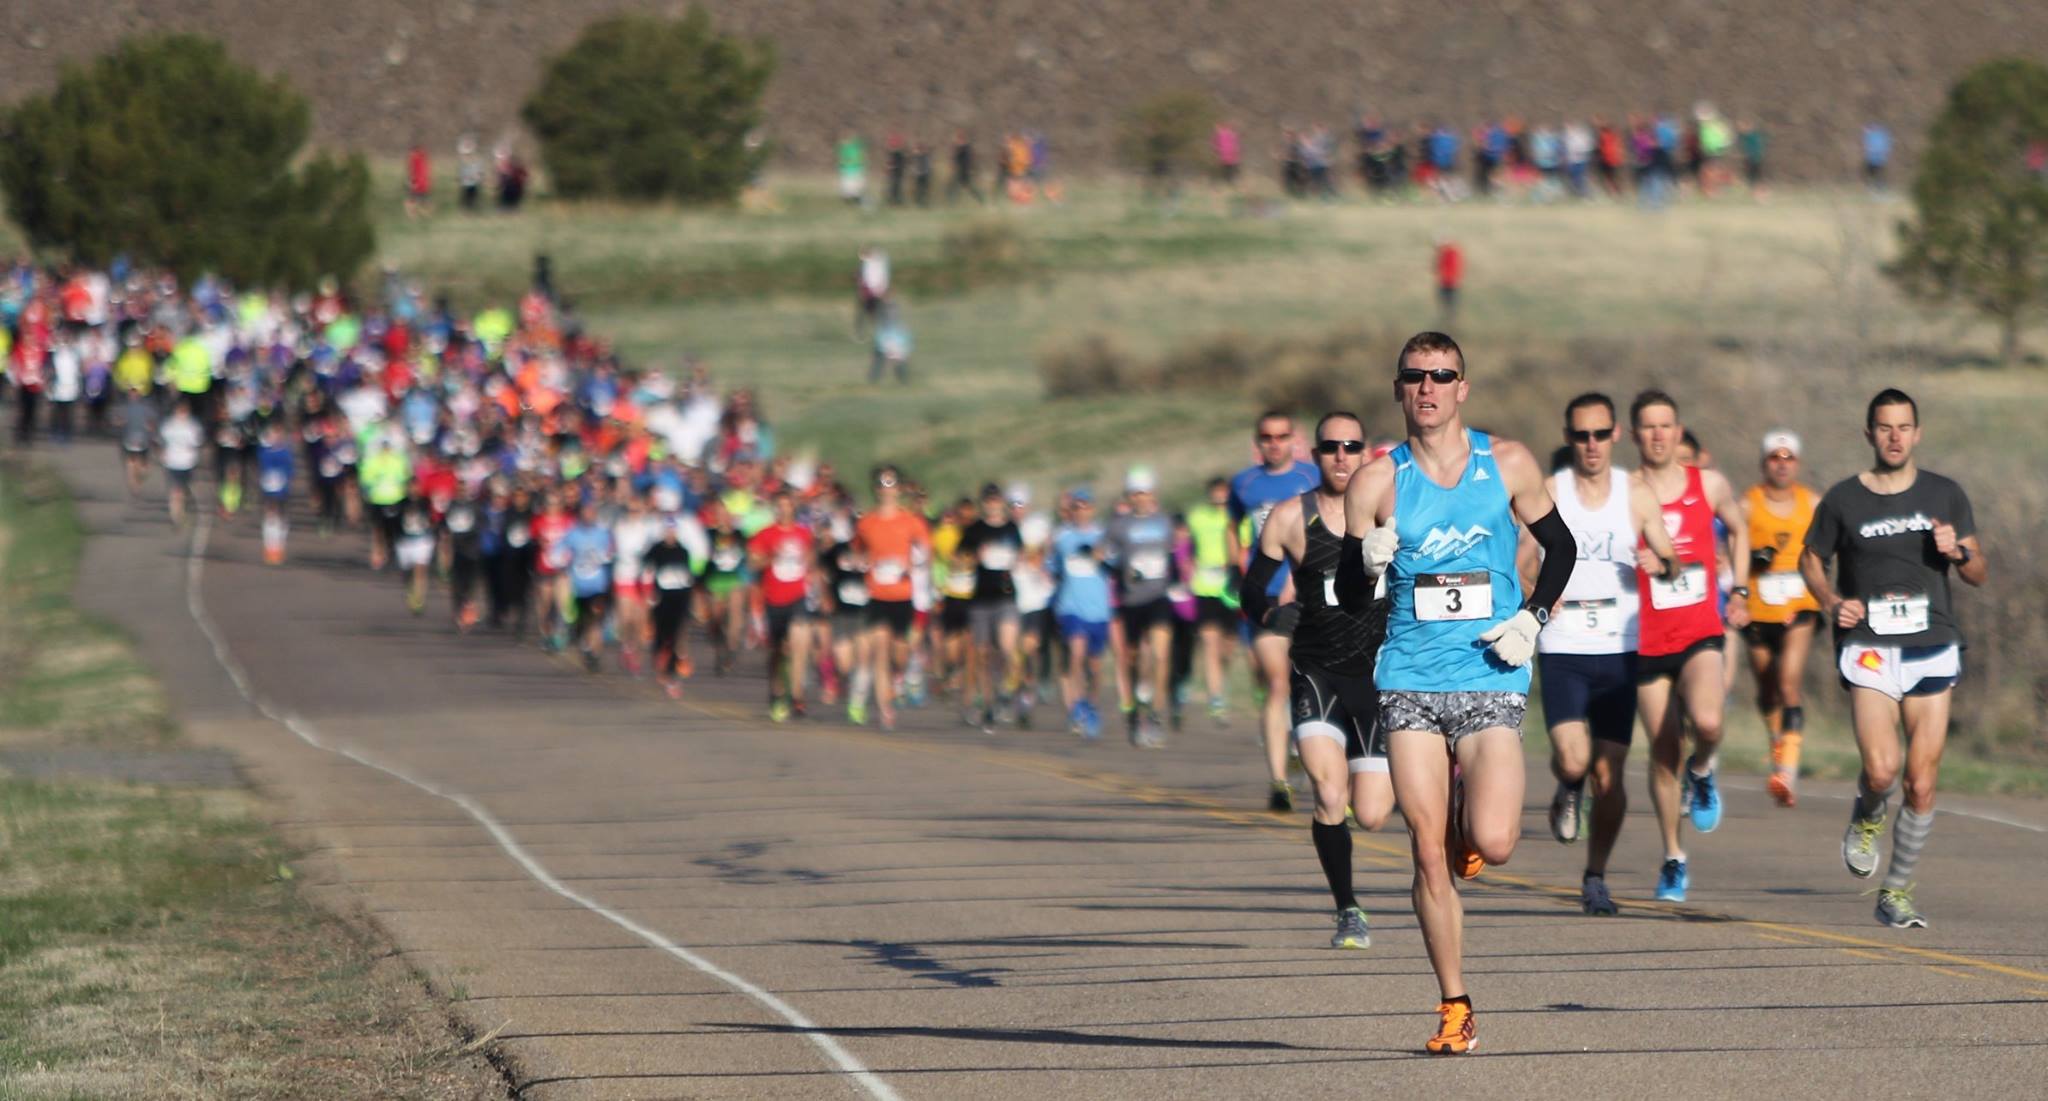 30+ Colorado Marathons, Half Marathons, Triathlons and Fun Runs to